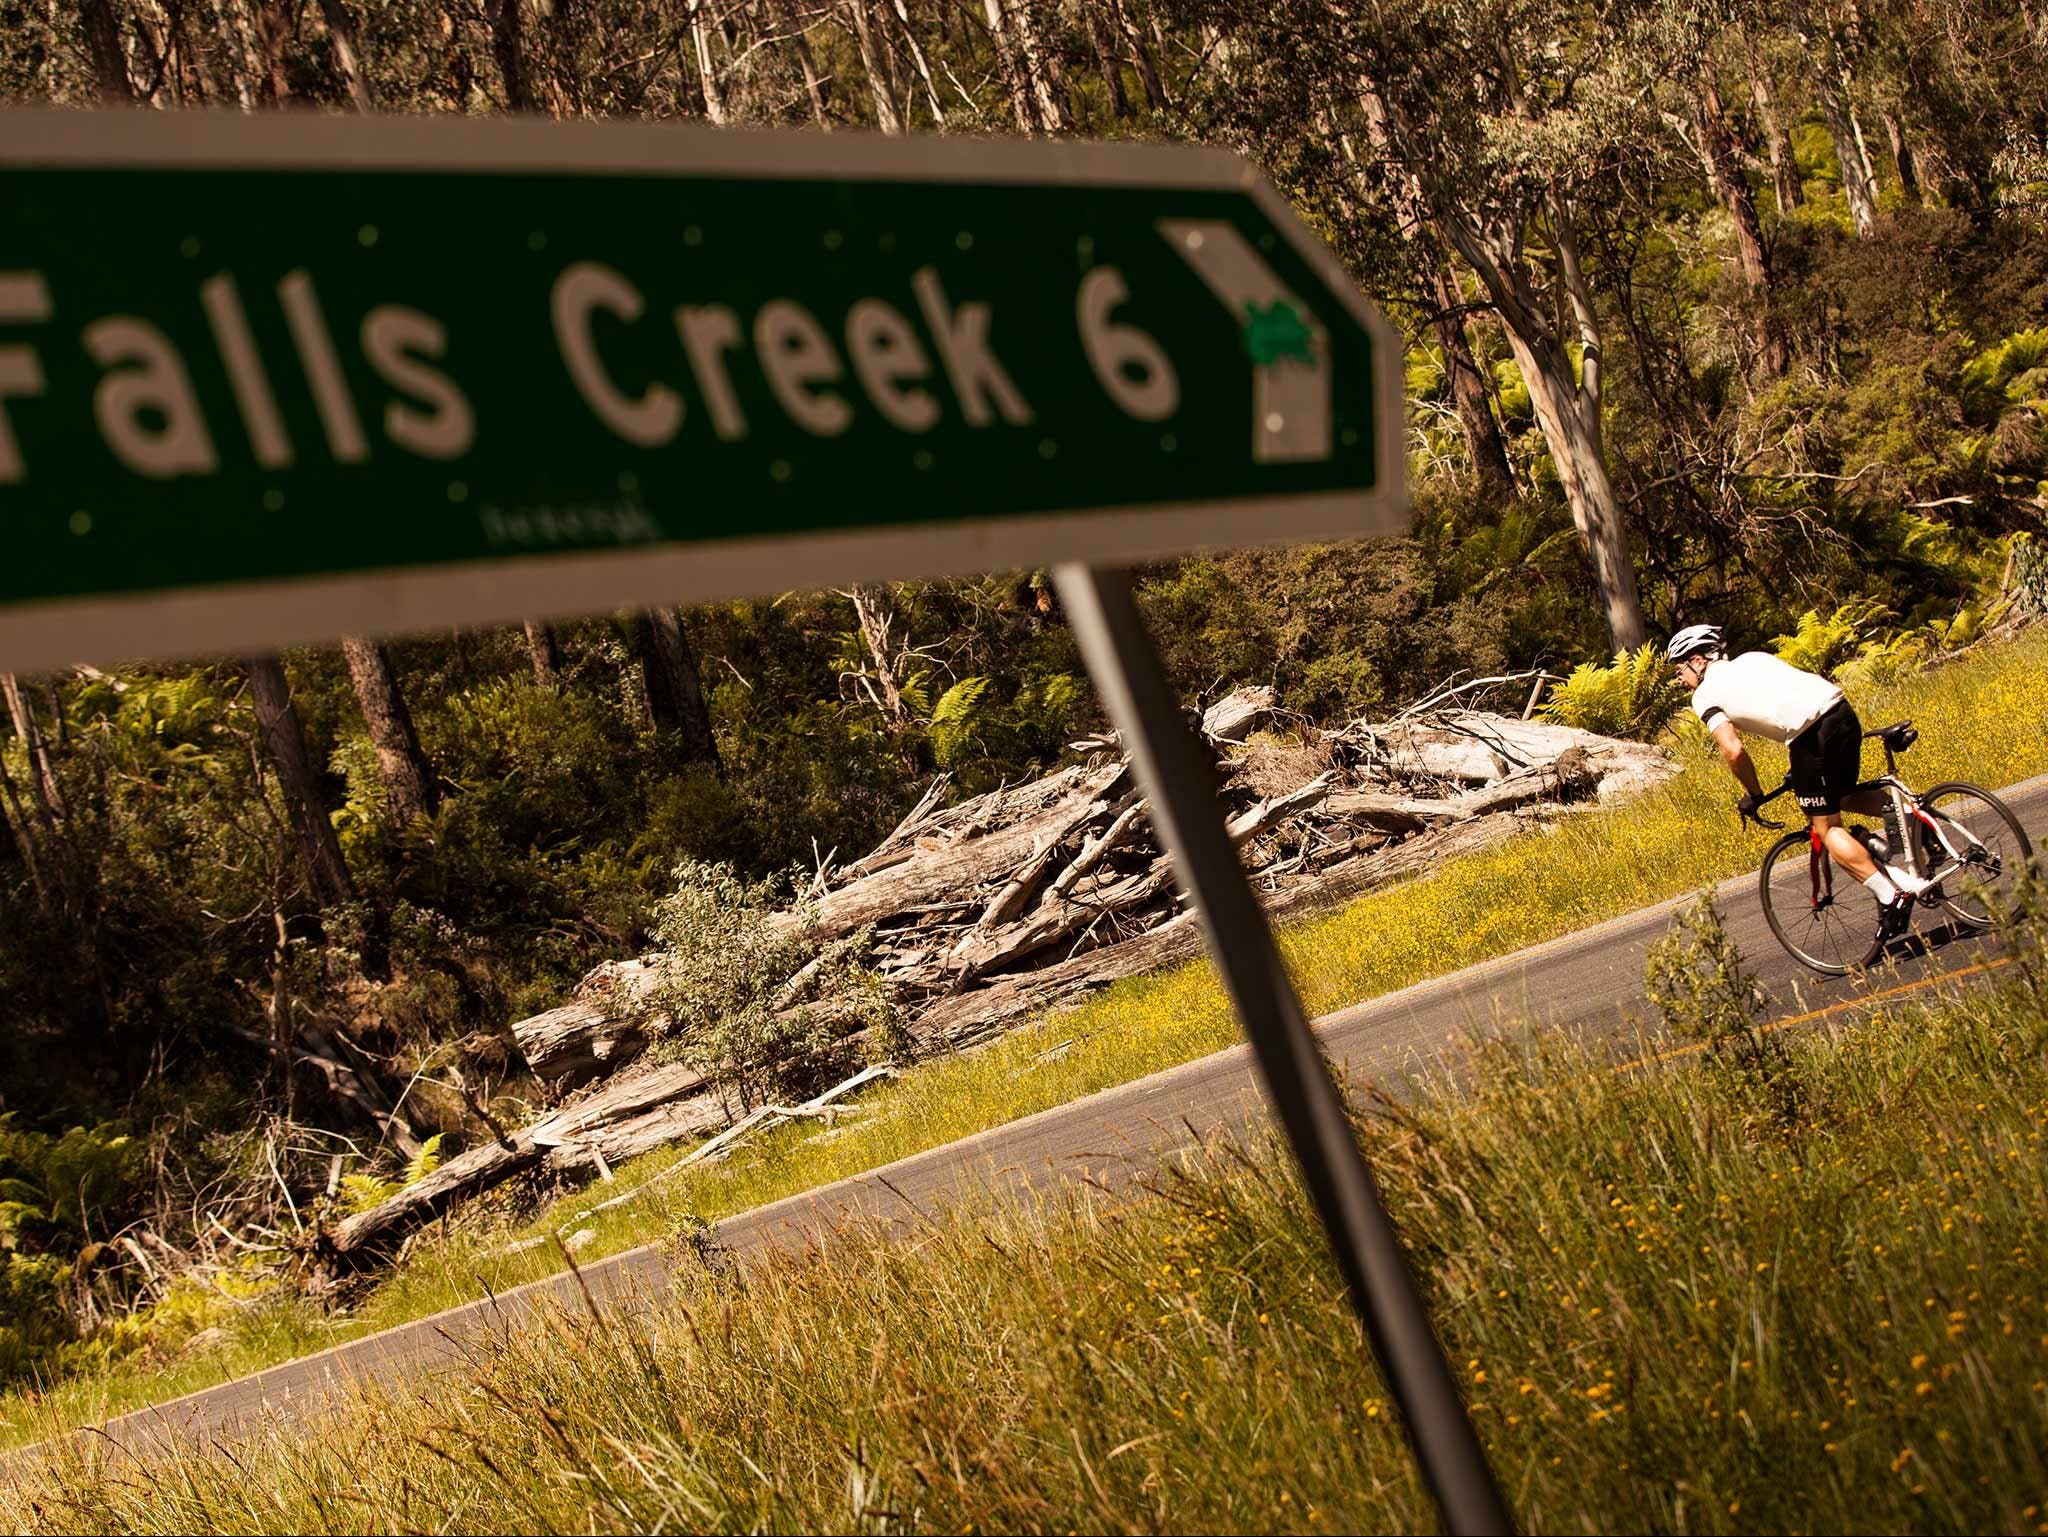 7 Peaks Ride - Falls Creek - Attractions Melbourne